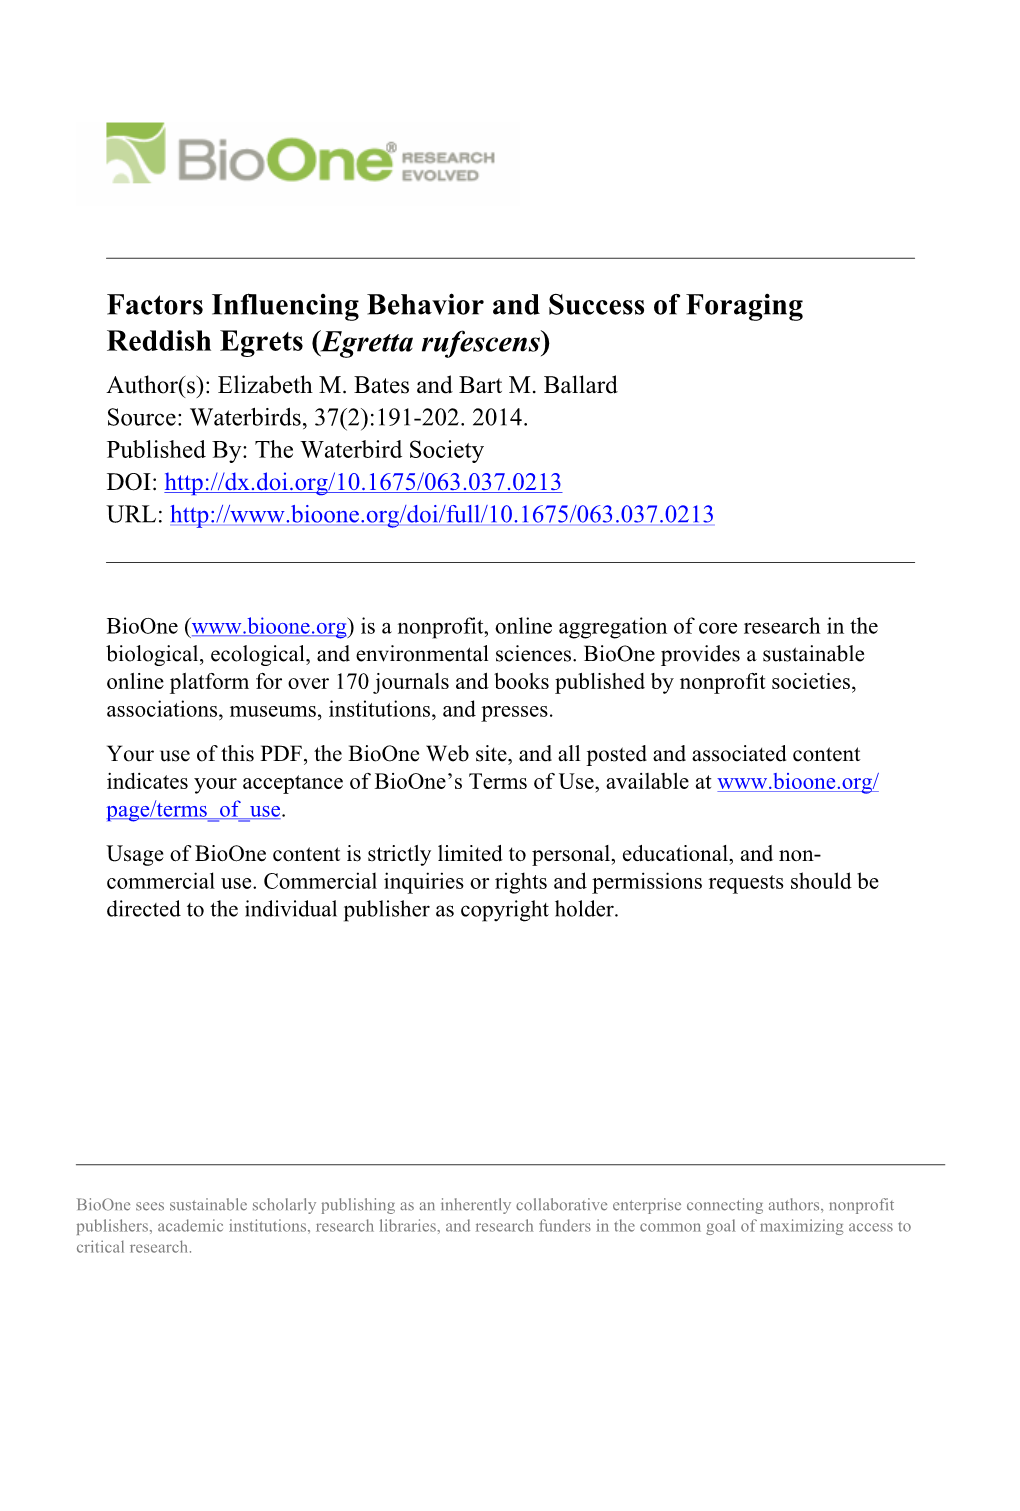 Factors Influencing Behavior and Success of Foraging Reddish Egrets (Egretta Rufescens) Author(S): Elizabeth M